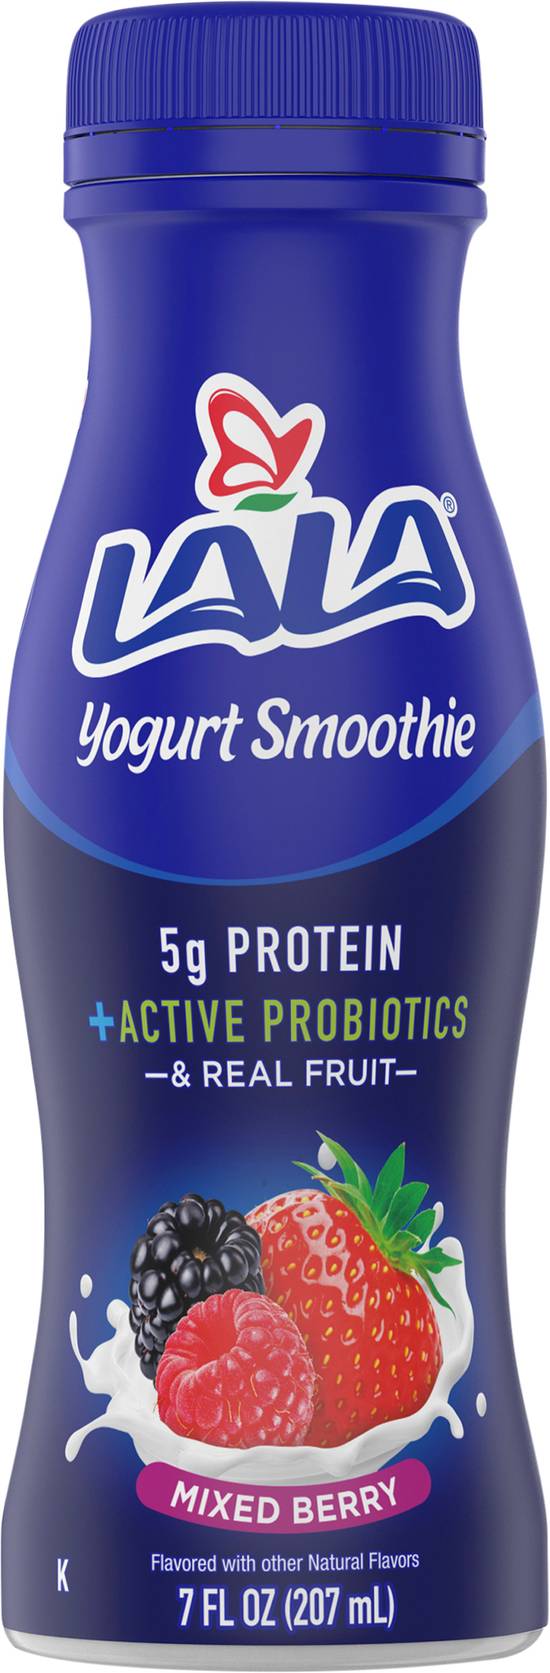 Lala Drinkable Yogurt Smoothie Mixed Berry